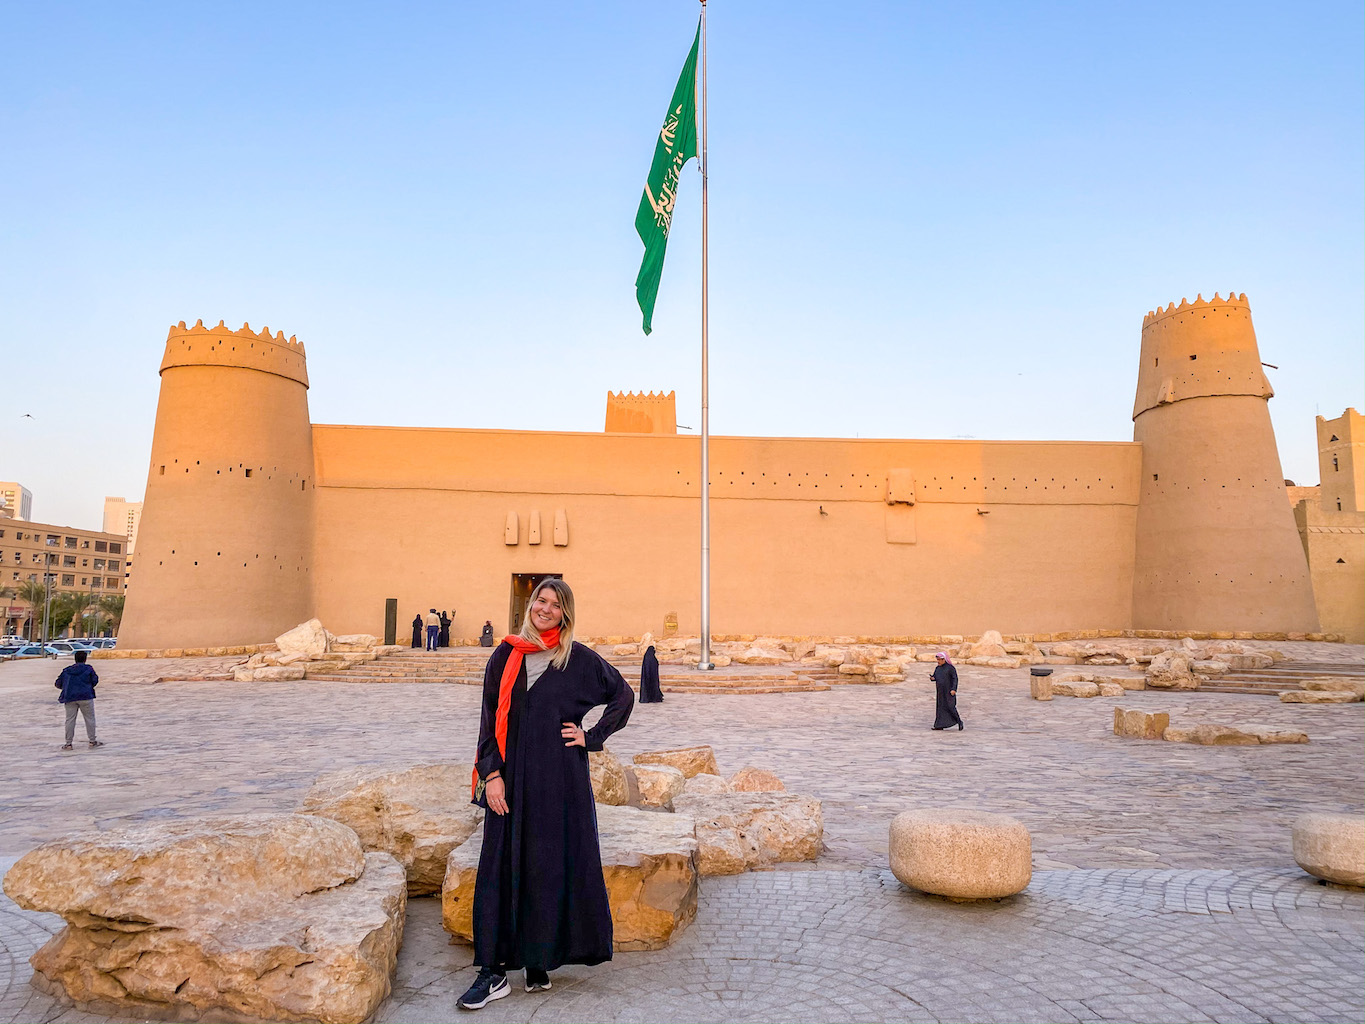 Riyadh travel guide, ellie quinn at masmak fort in Riyadh in an abaya